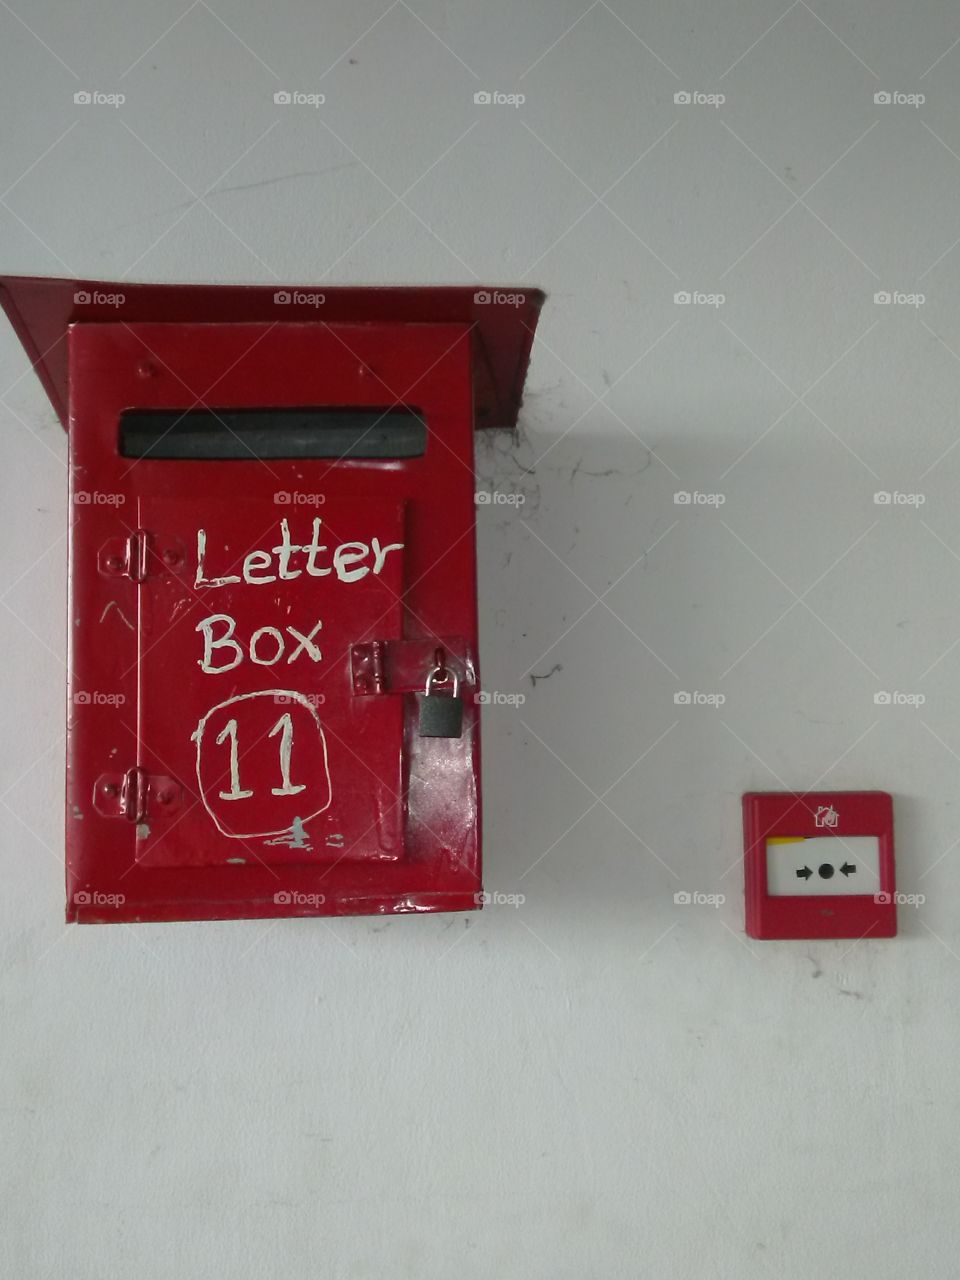 post box